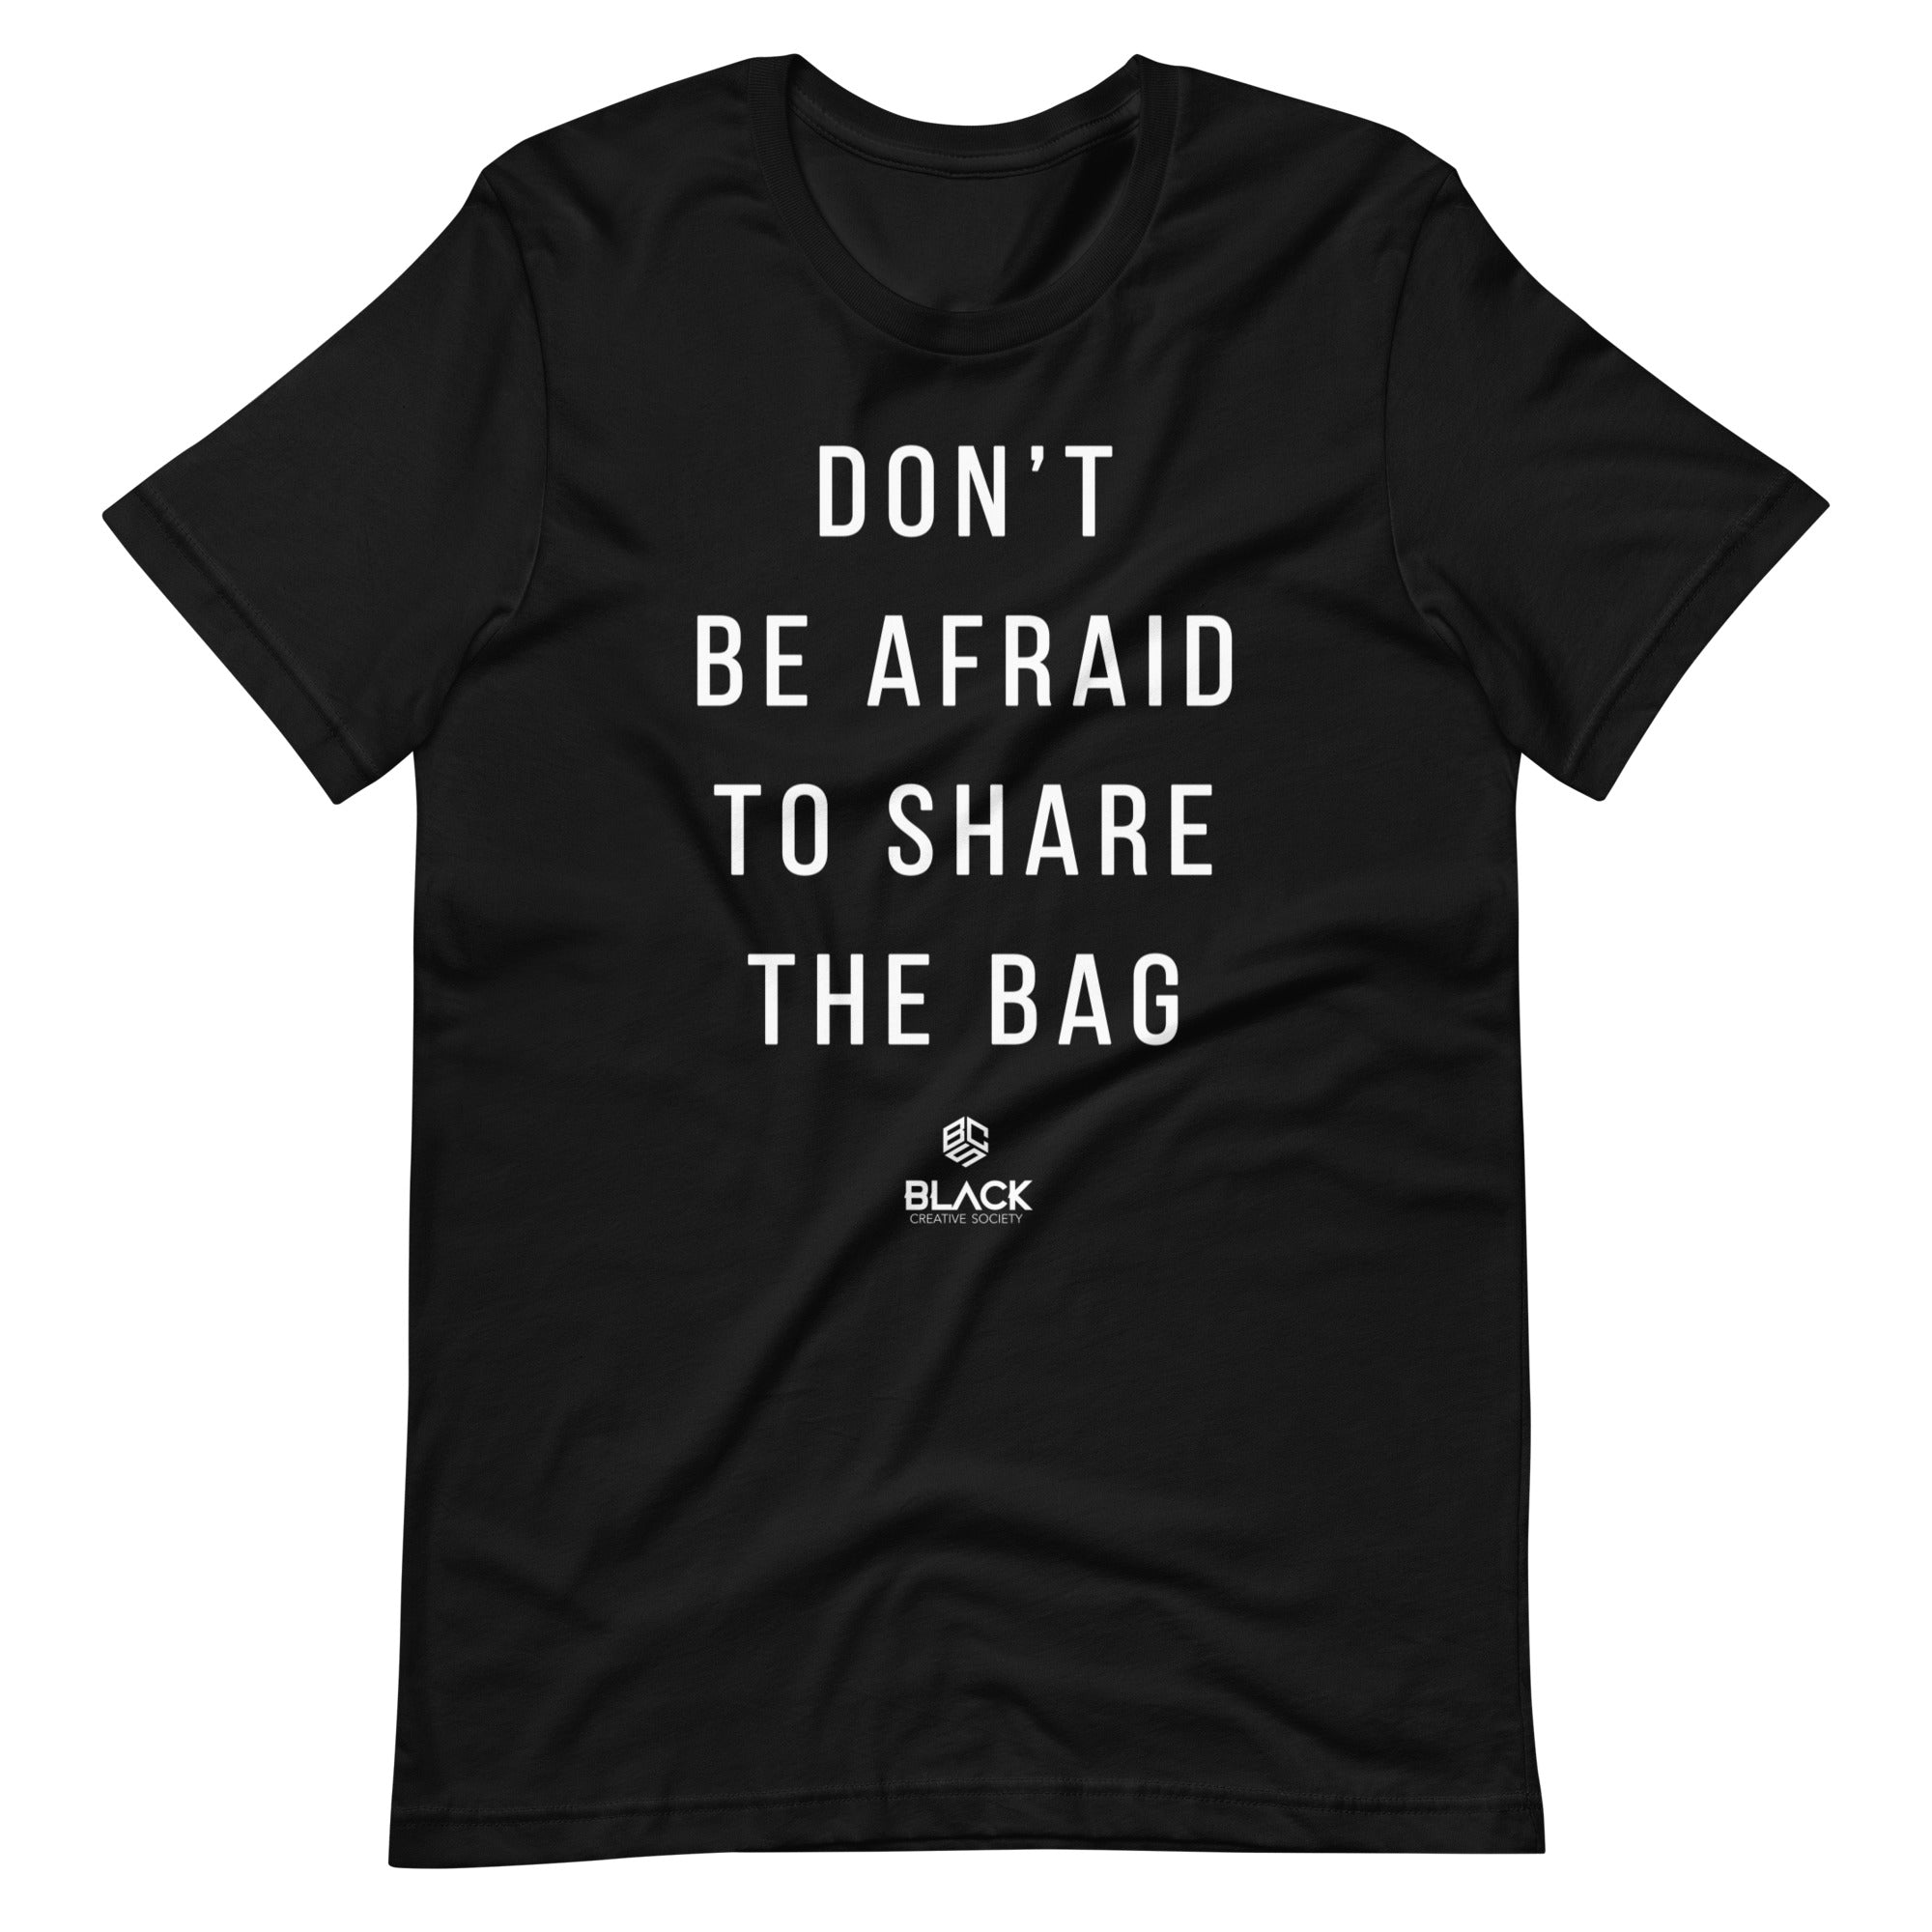 Share The Bag Short-Sleeve Unisex T-Shirt